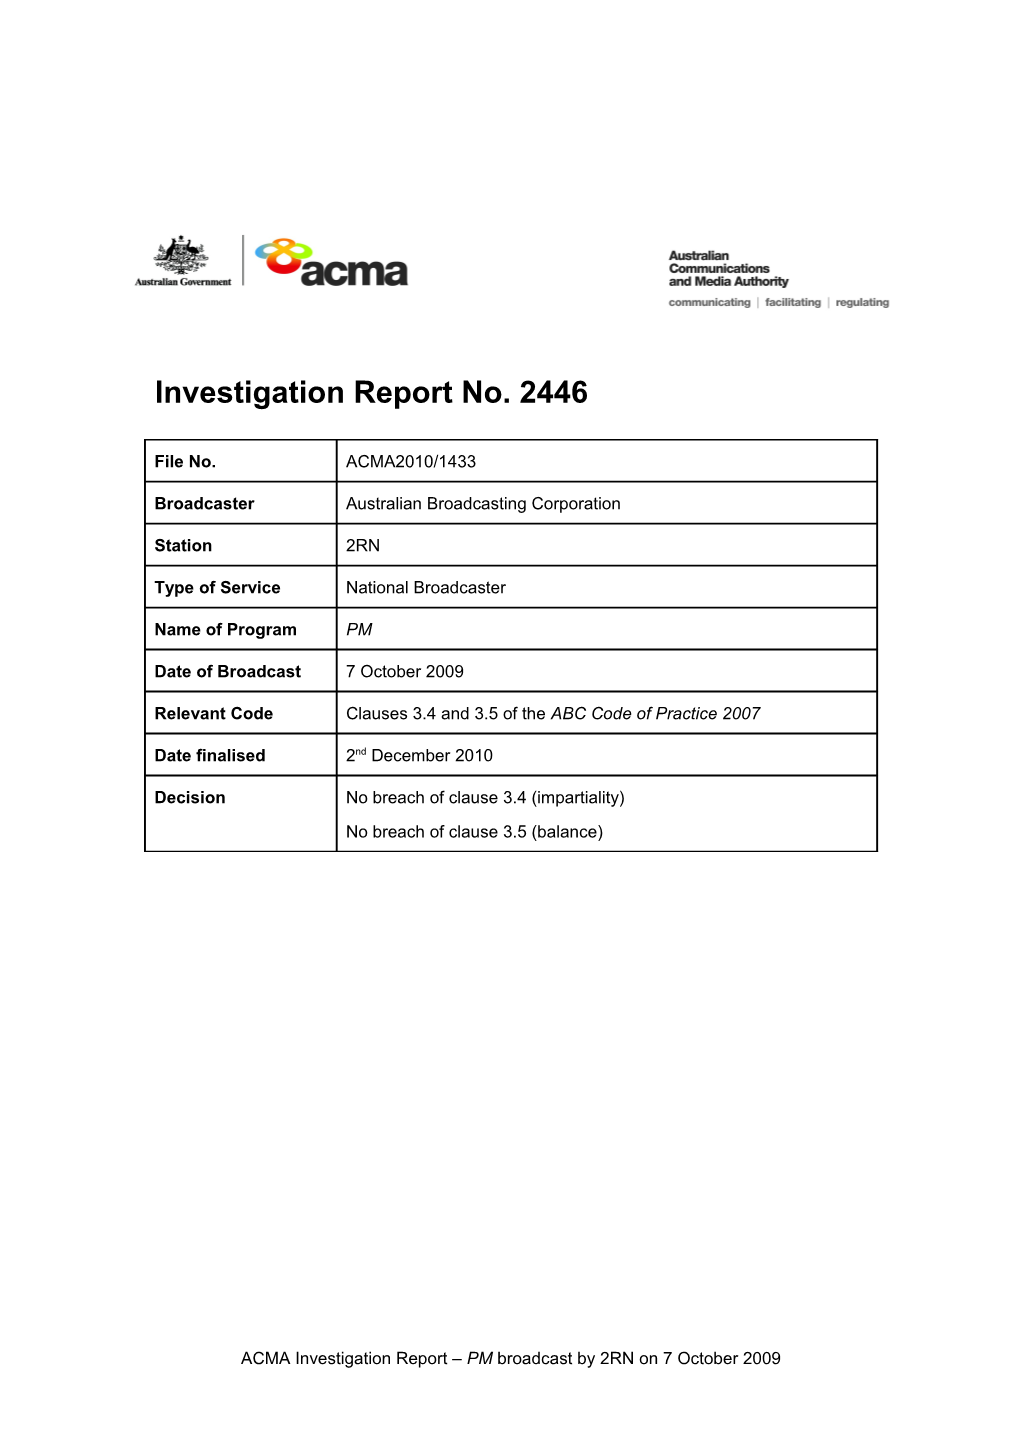 2RN - ACMA Investigation Report 2446